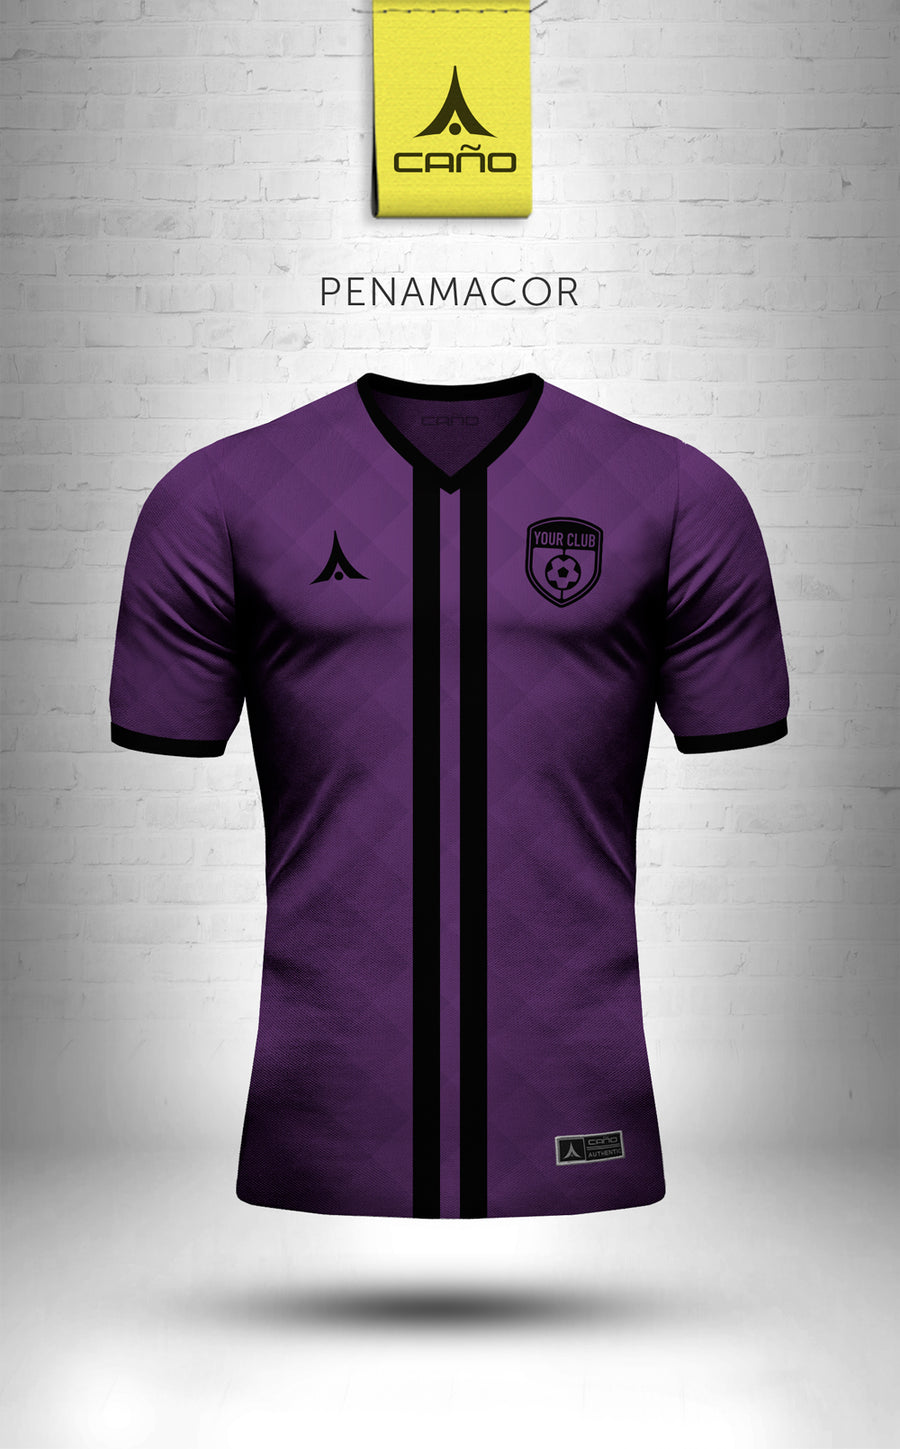 Penamacor in purple/black